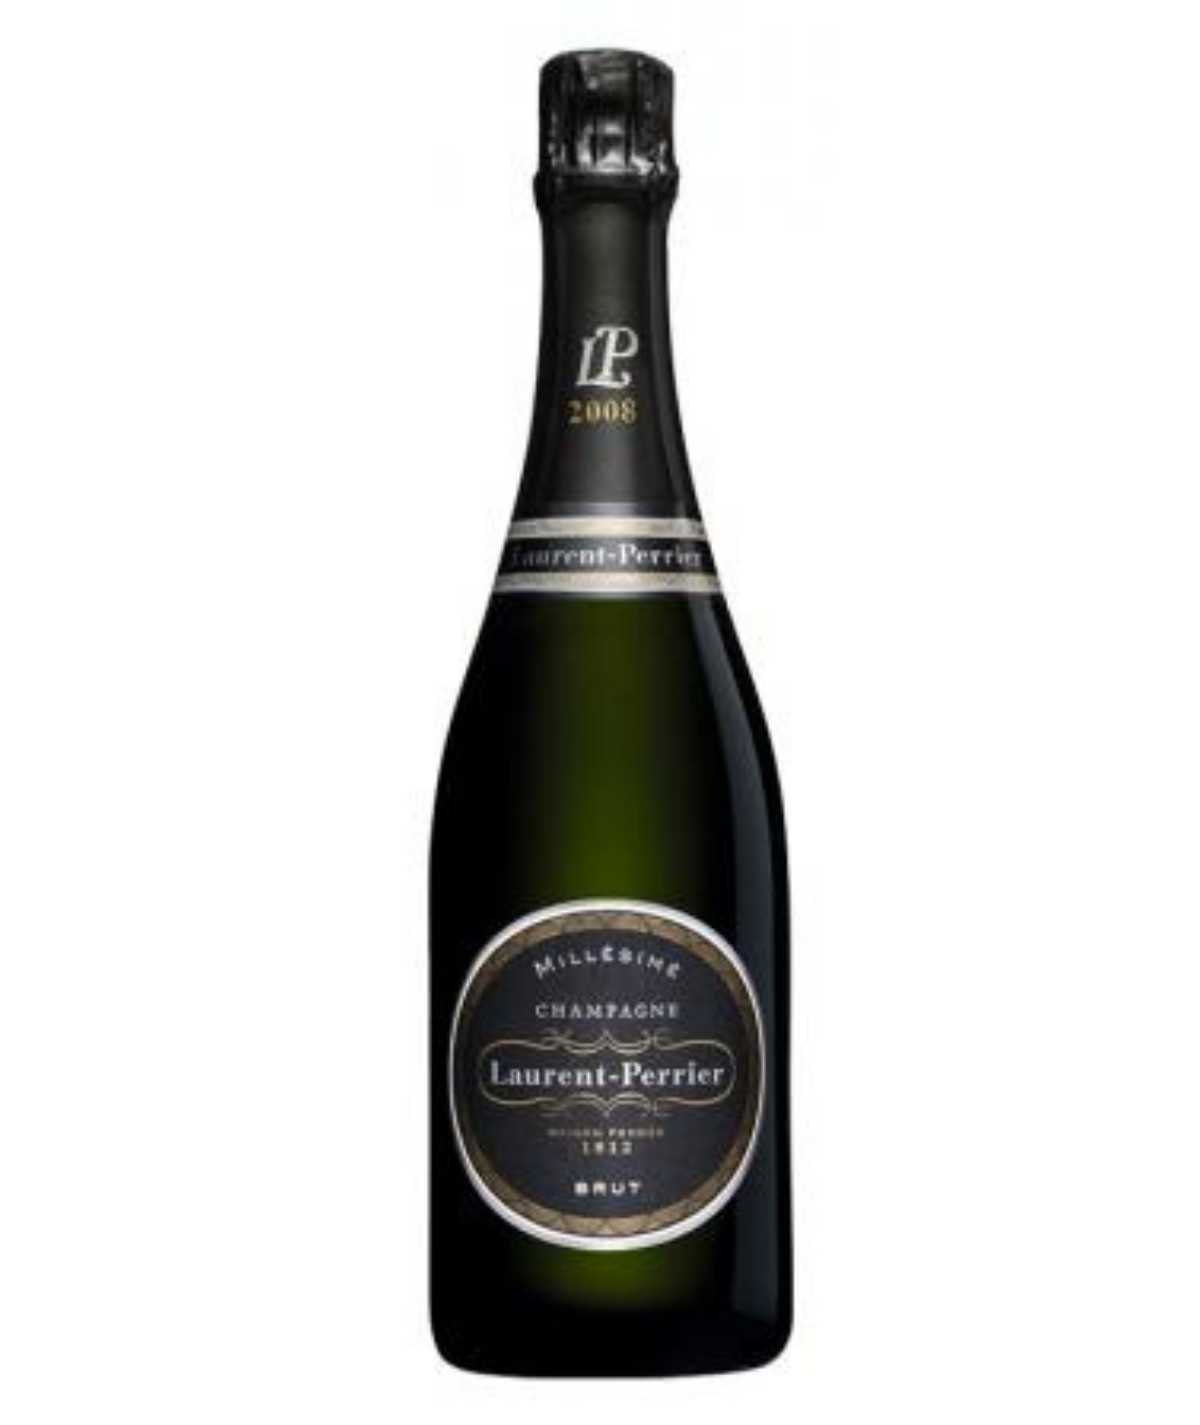 LAURENT-PERRIER Champagne 2008 vintage